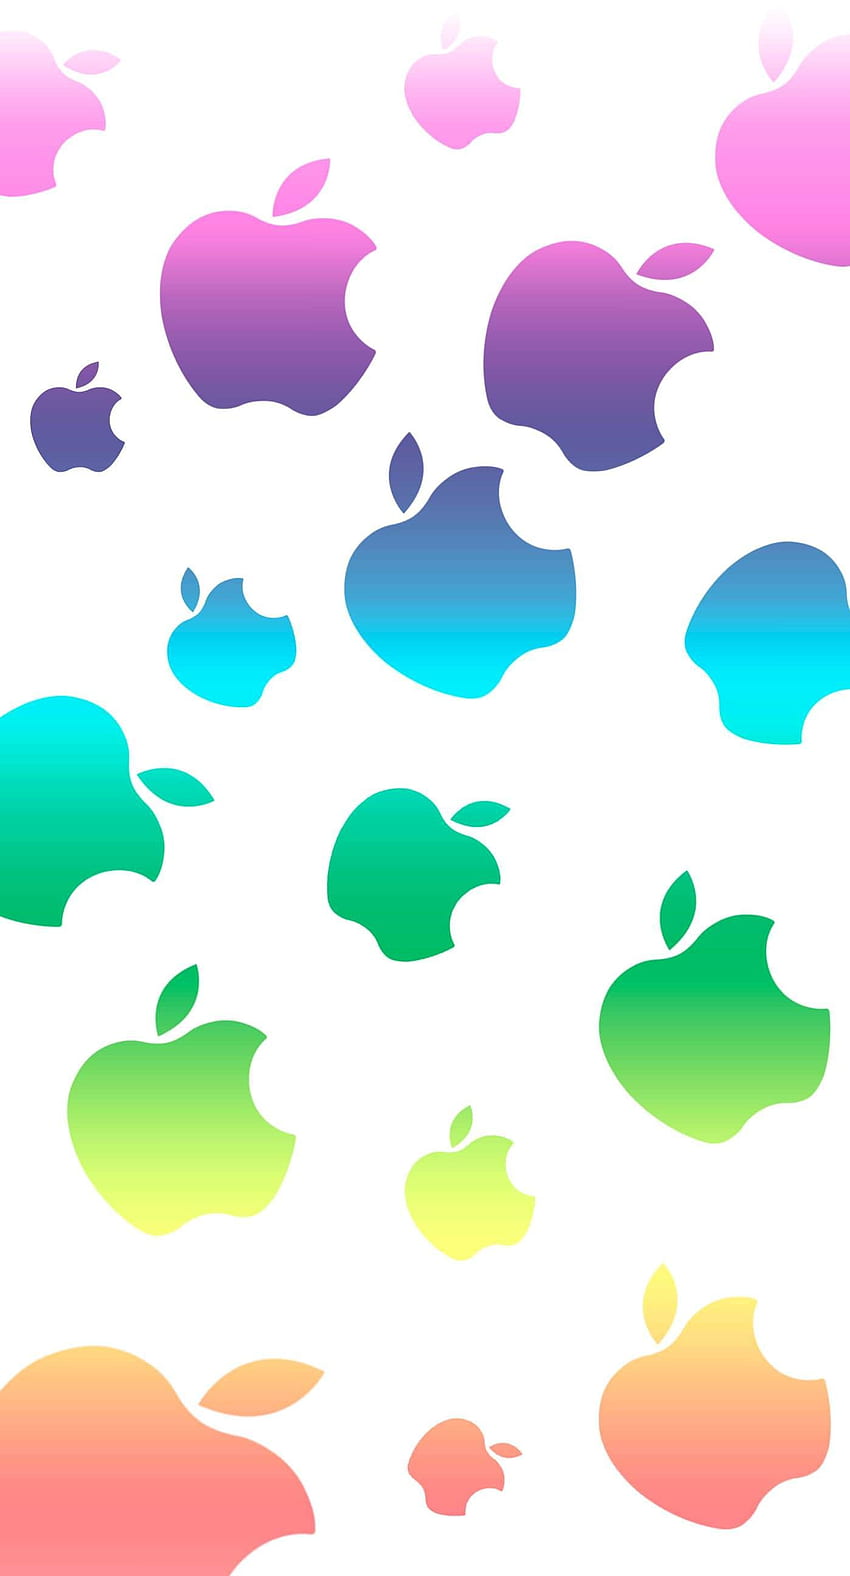 Fonds d'écran vraiment mignon iPhone - Top gratuit Fond iPhone vraiment mignon - Wallp in 2020. 애플 로고, 귀여운 아이폰, 애플 아이폰 HD 전화 배경 화면